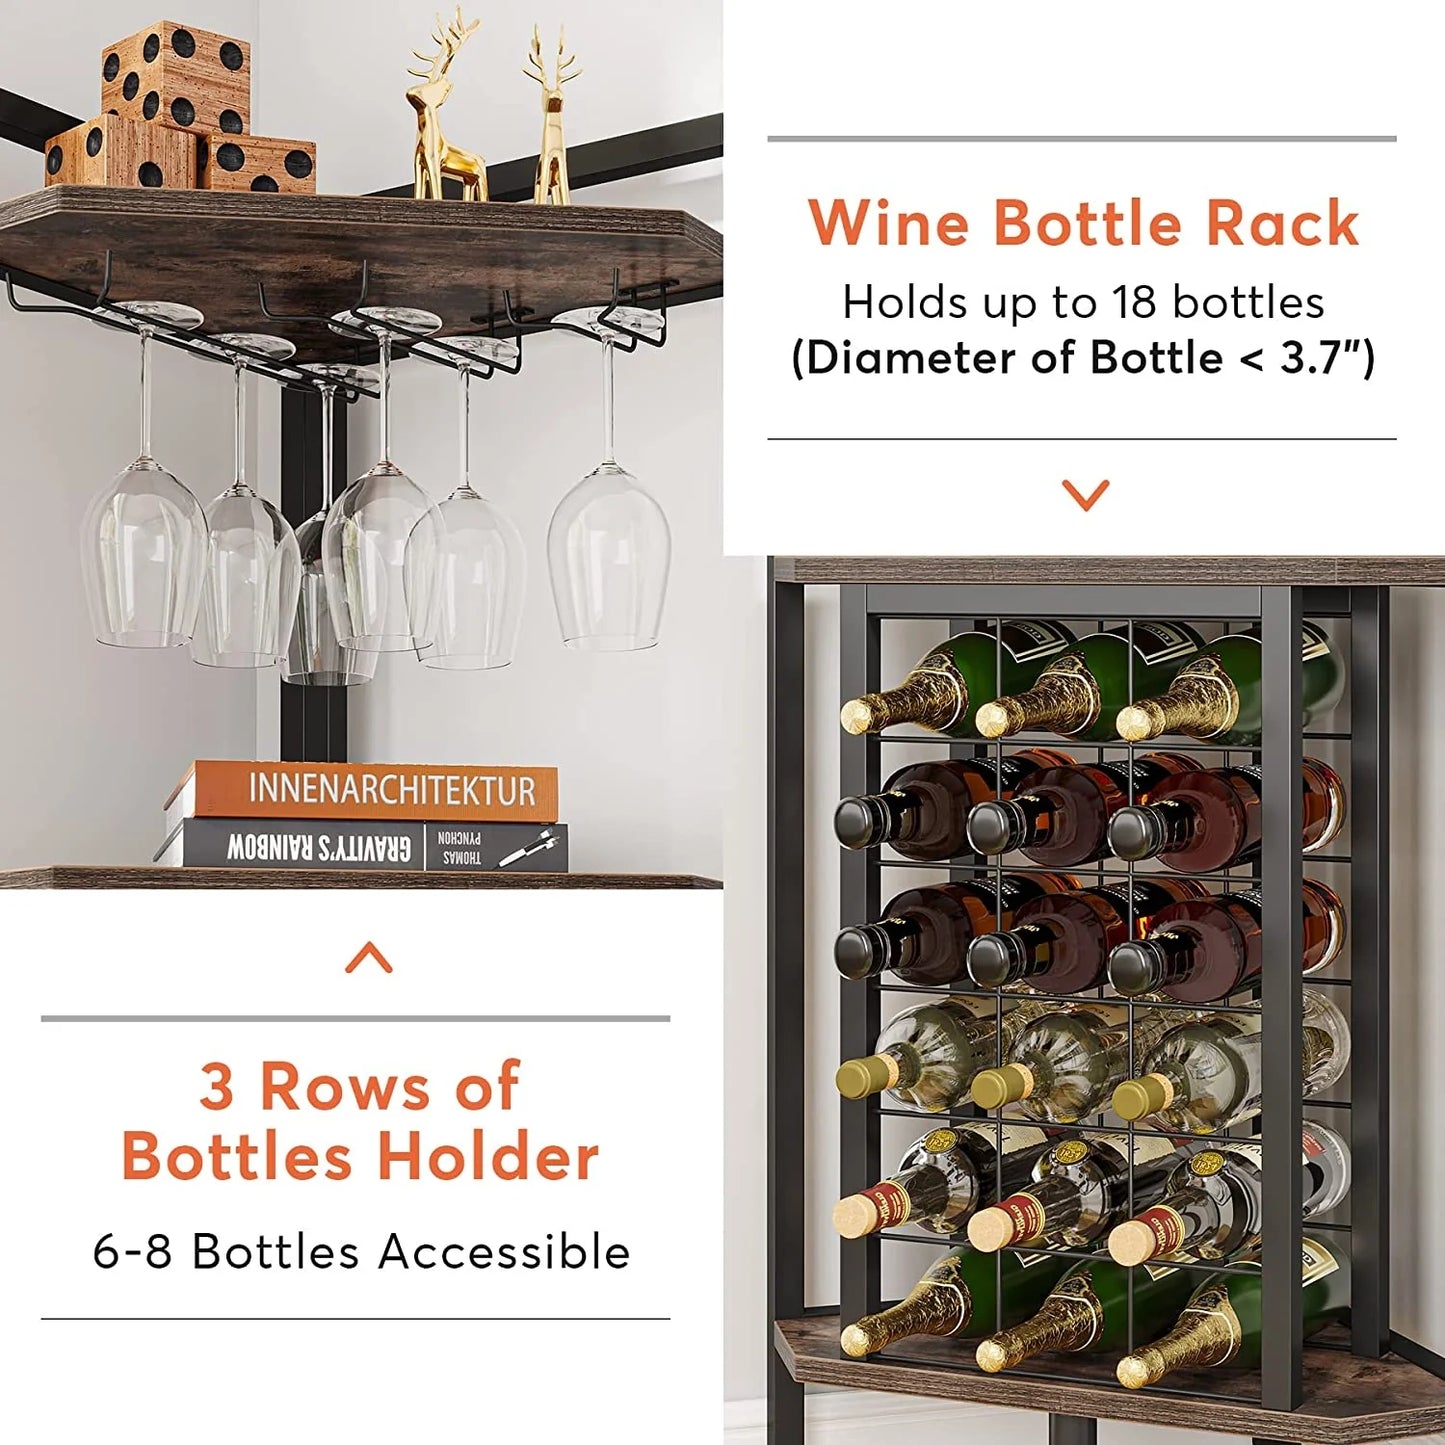 Tribesigns Wine Rack, 4 Tier Corner Shelf with Glass Holder